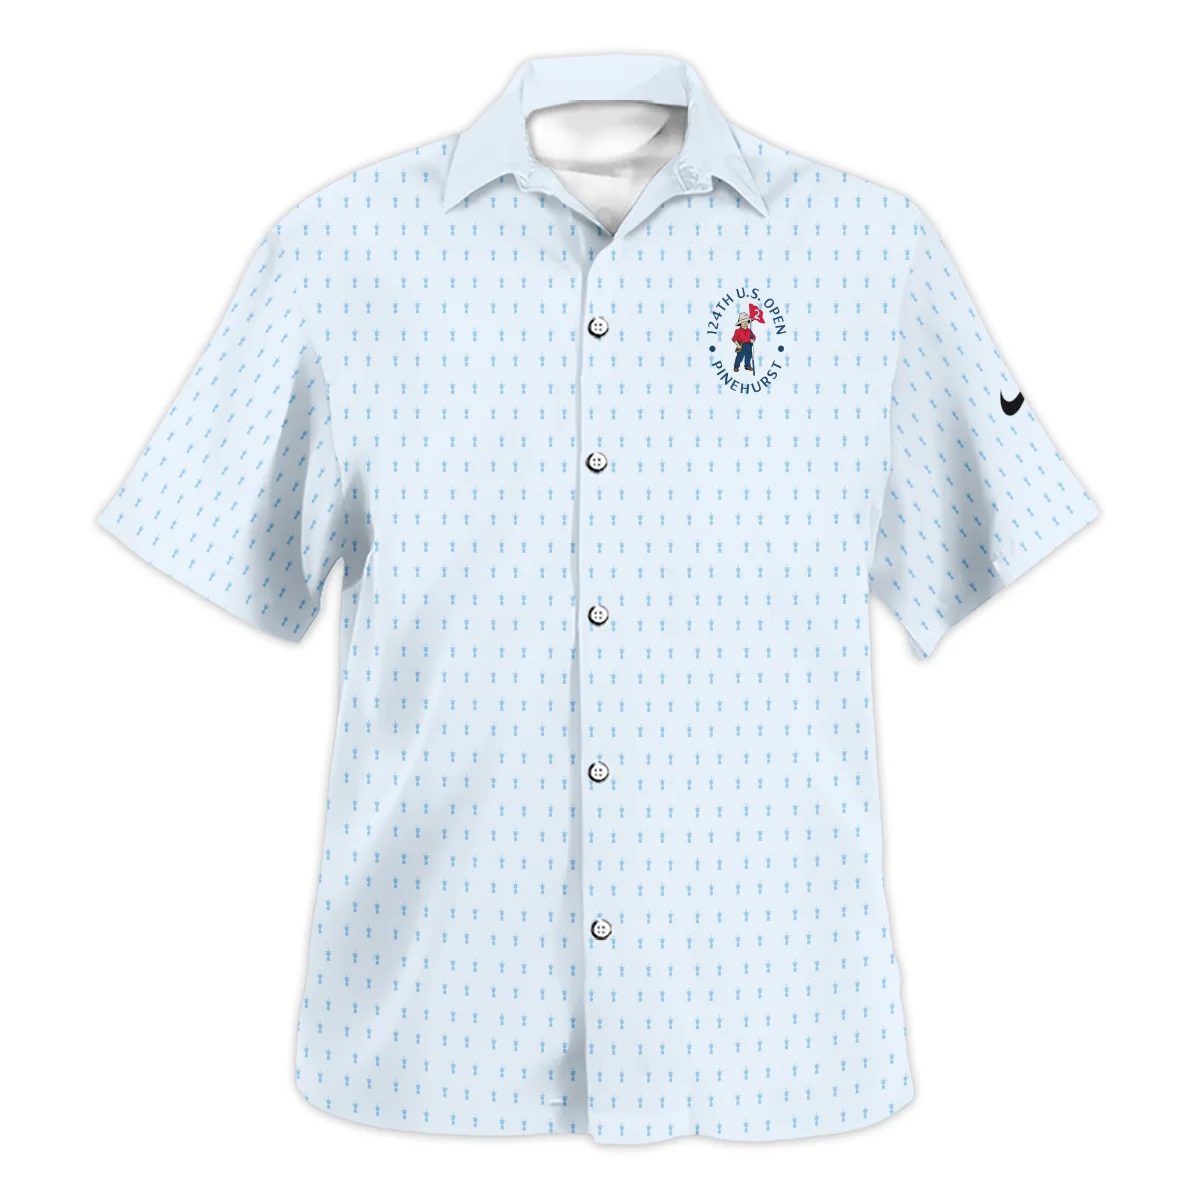 Golf Pattern Cup Light Blue Green 124th U.S. Open Pinehurst Nike Polo Shirt Style Classic Polo Shirt For Men